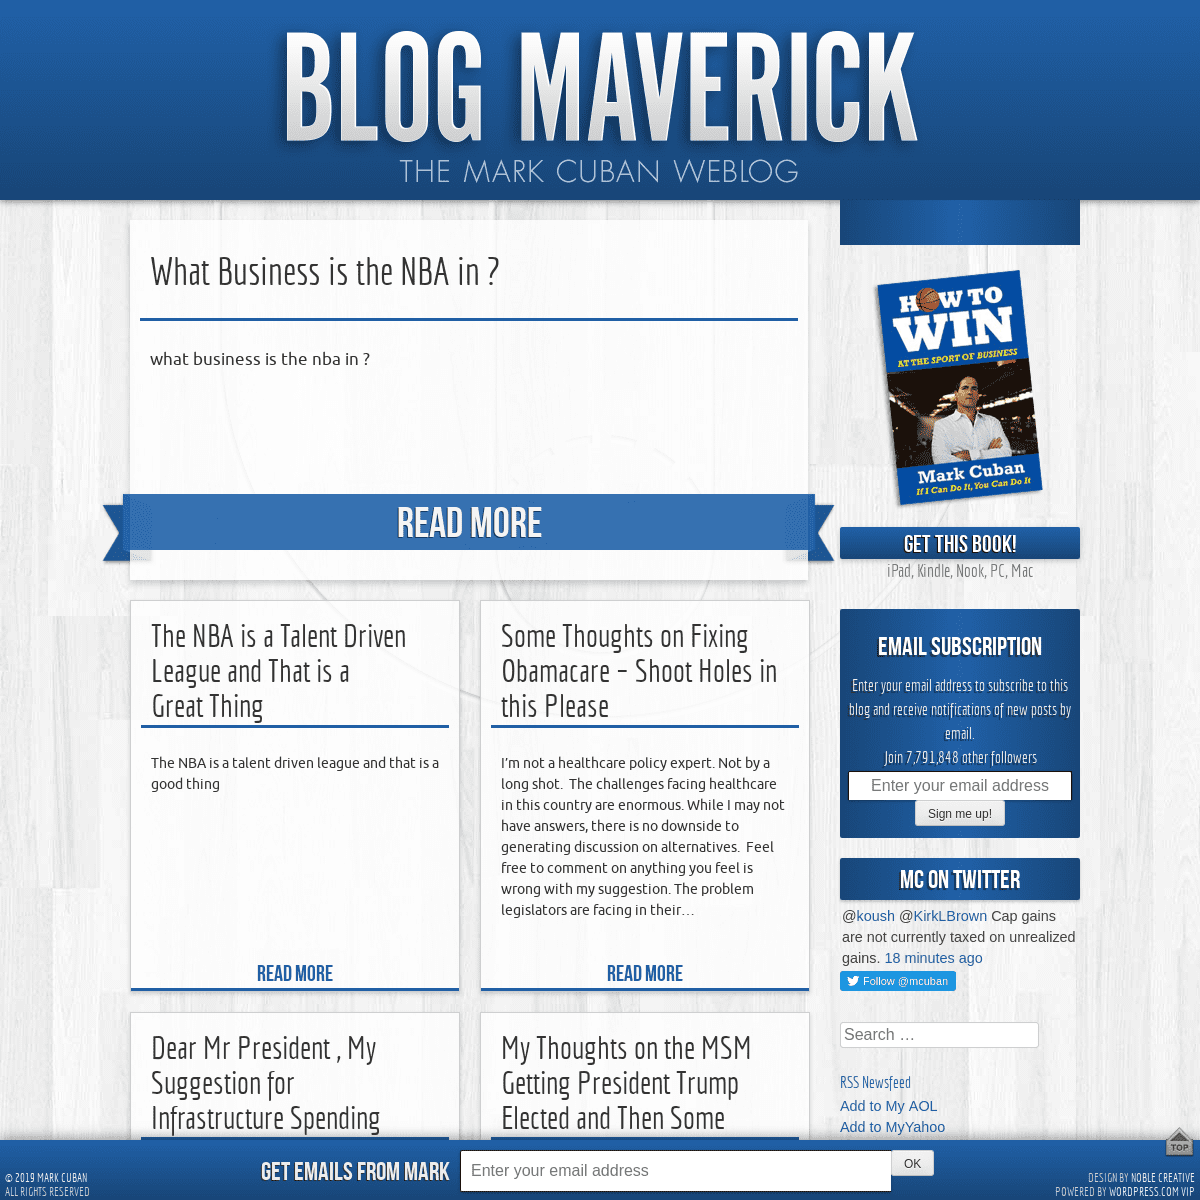 A complete backup of blogmaverick.com